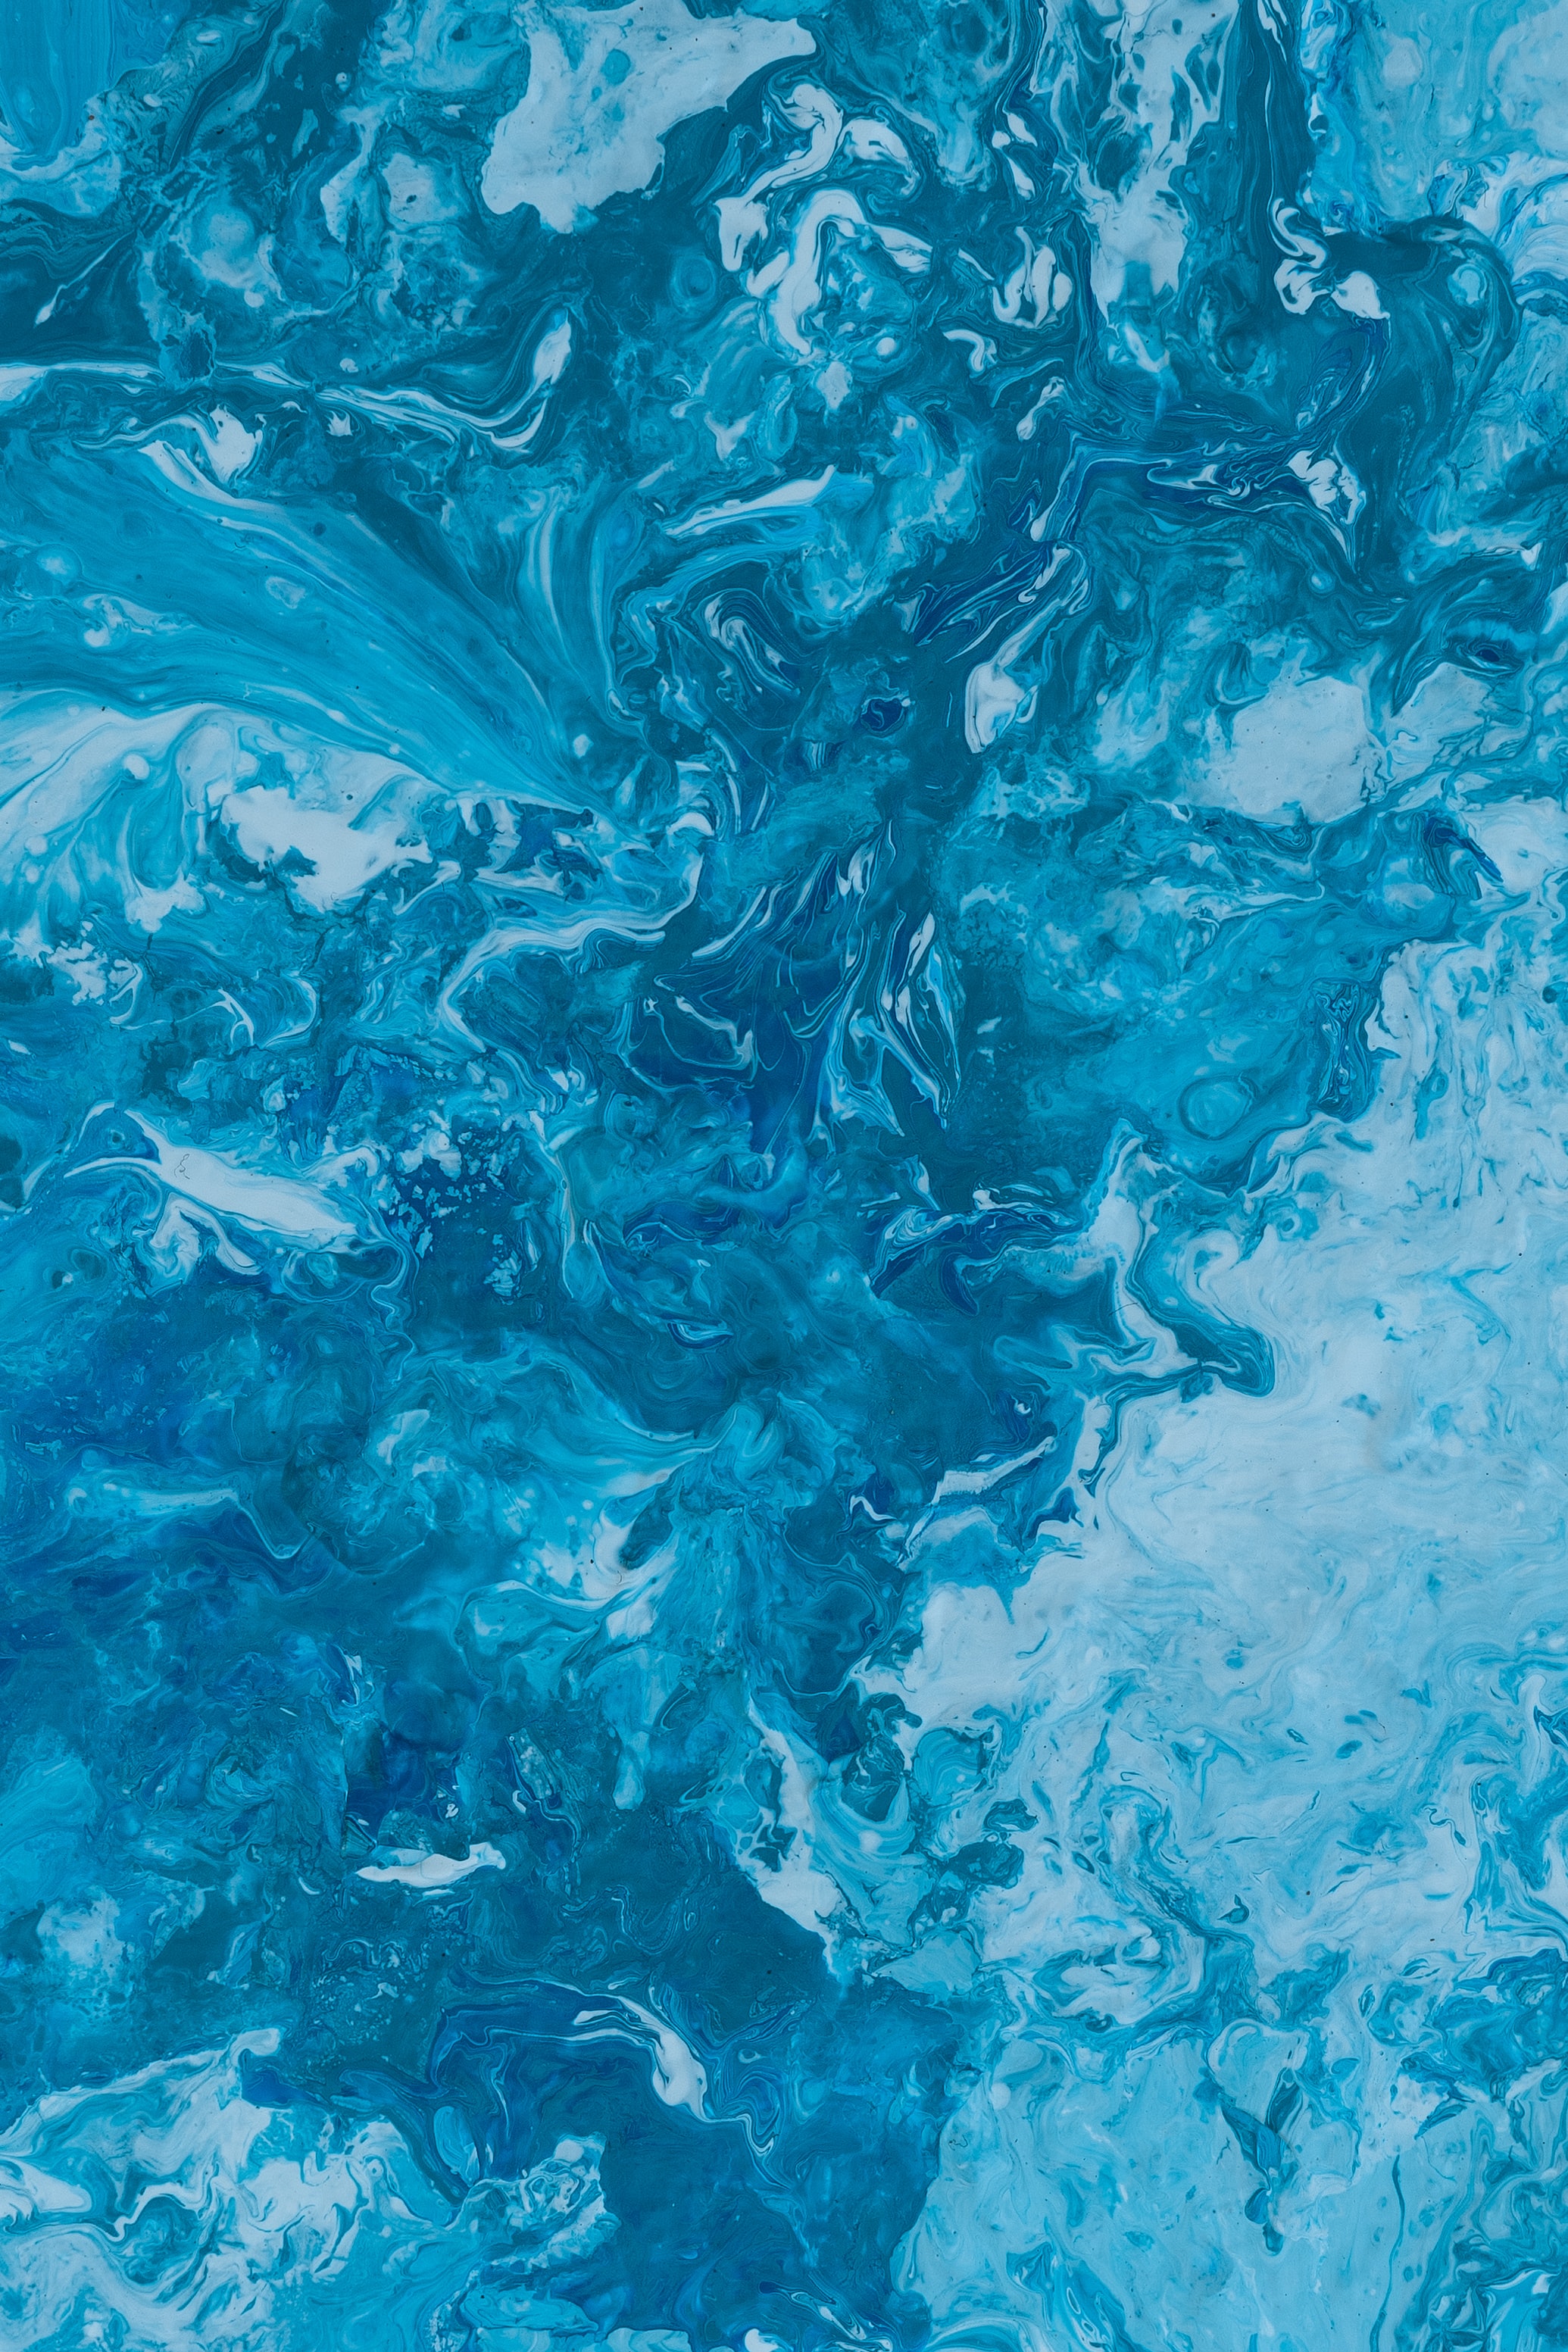 1920x1080 Background abstract, blue, divorces, paint, liquid